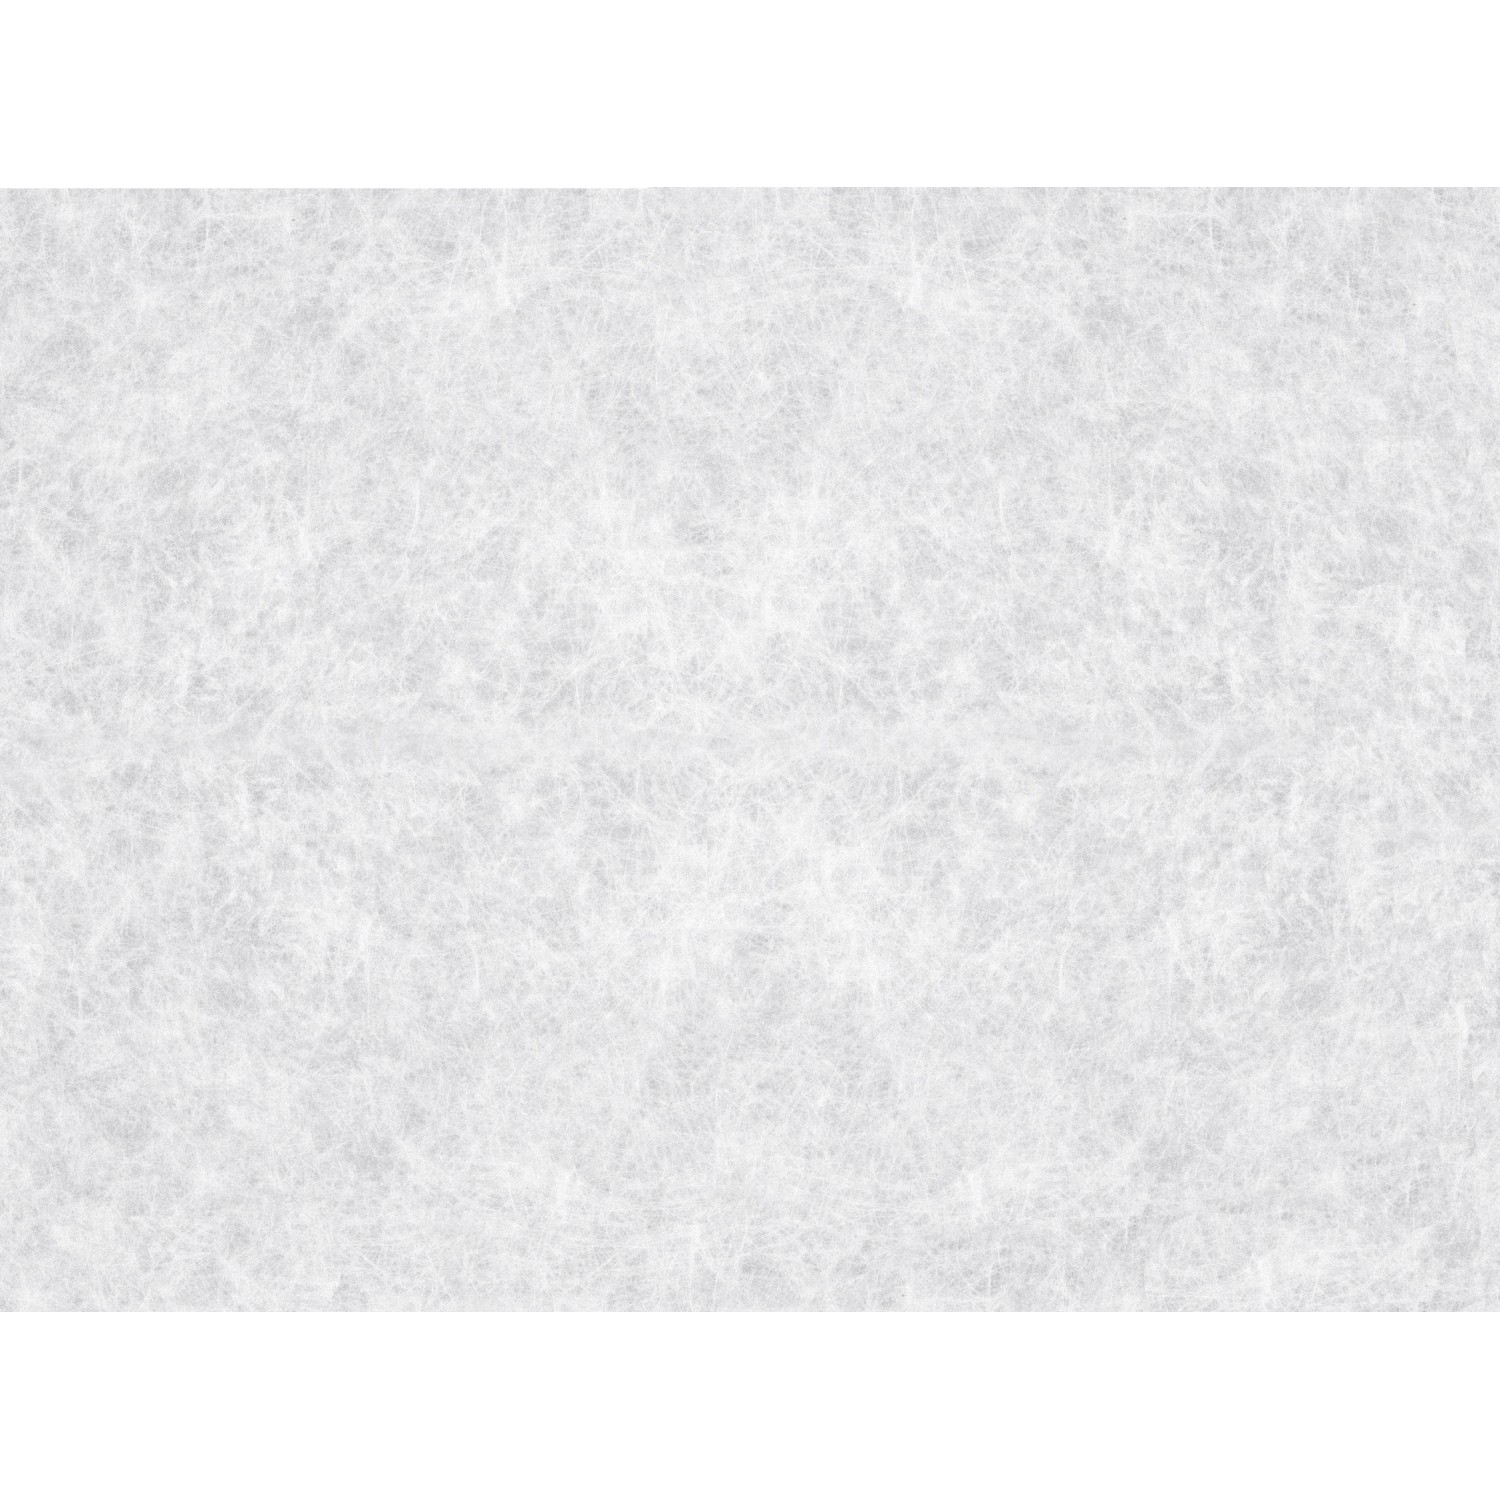 d-c-fix Klebefolie Reispapier Weiß 67,5 cm x 200 cm